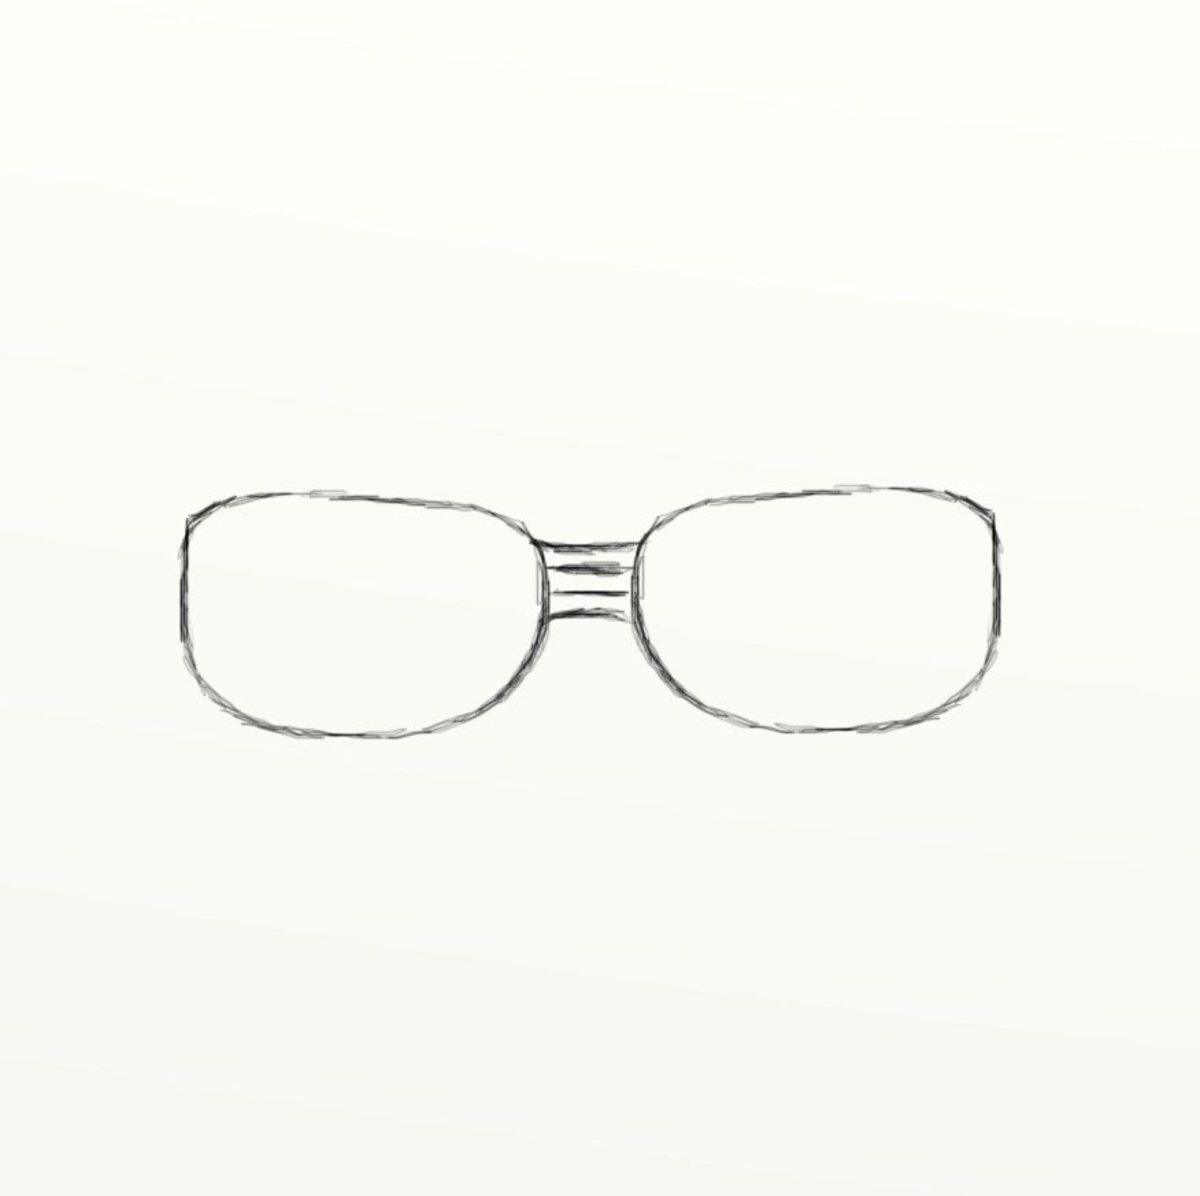 Sunglasses Drawing Image